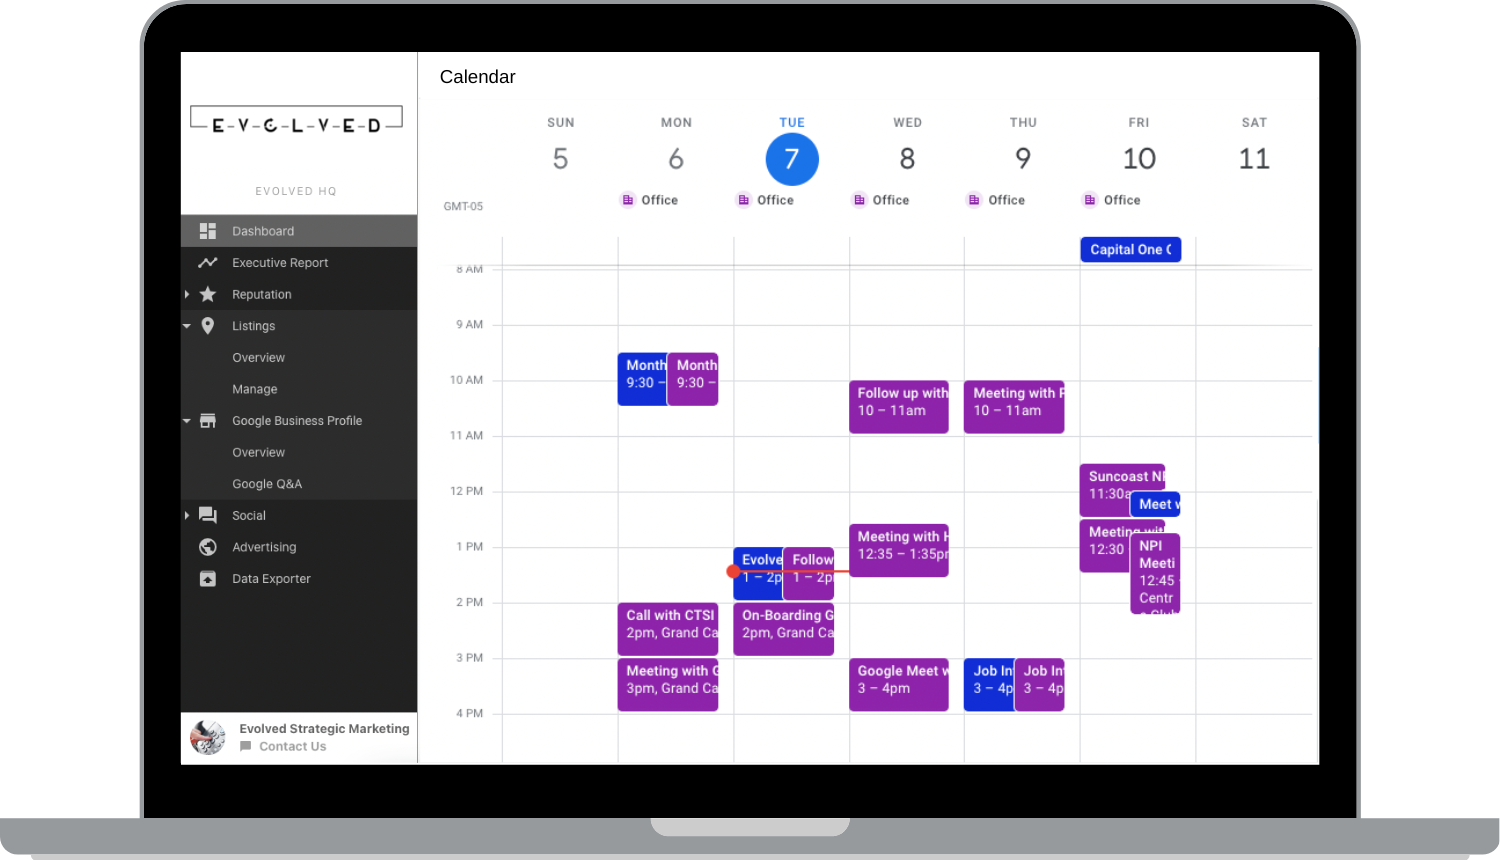 Multi-Locations Calendar Scheduling Application